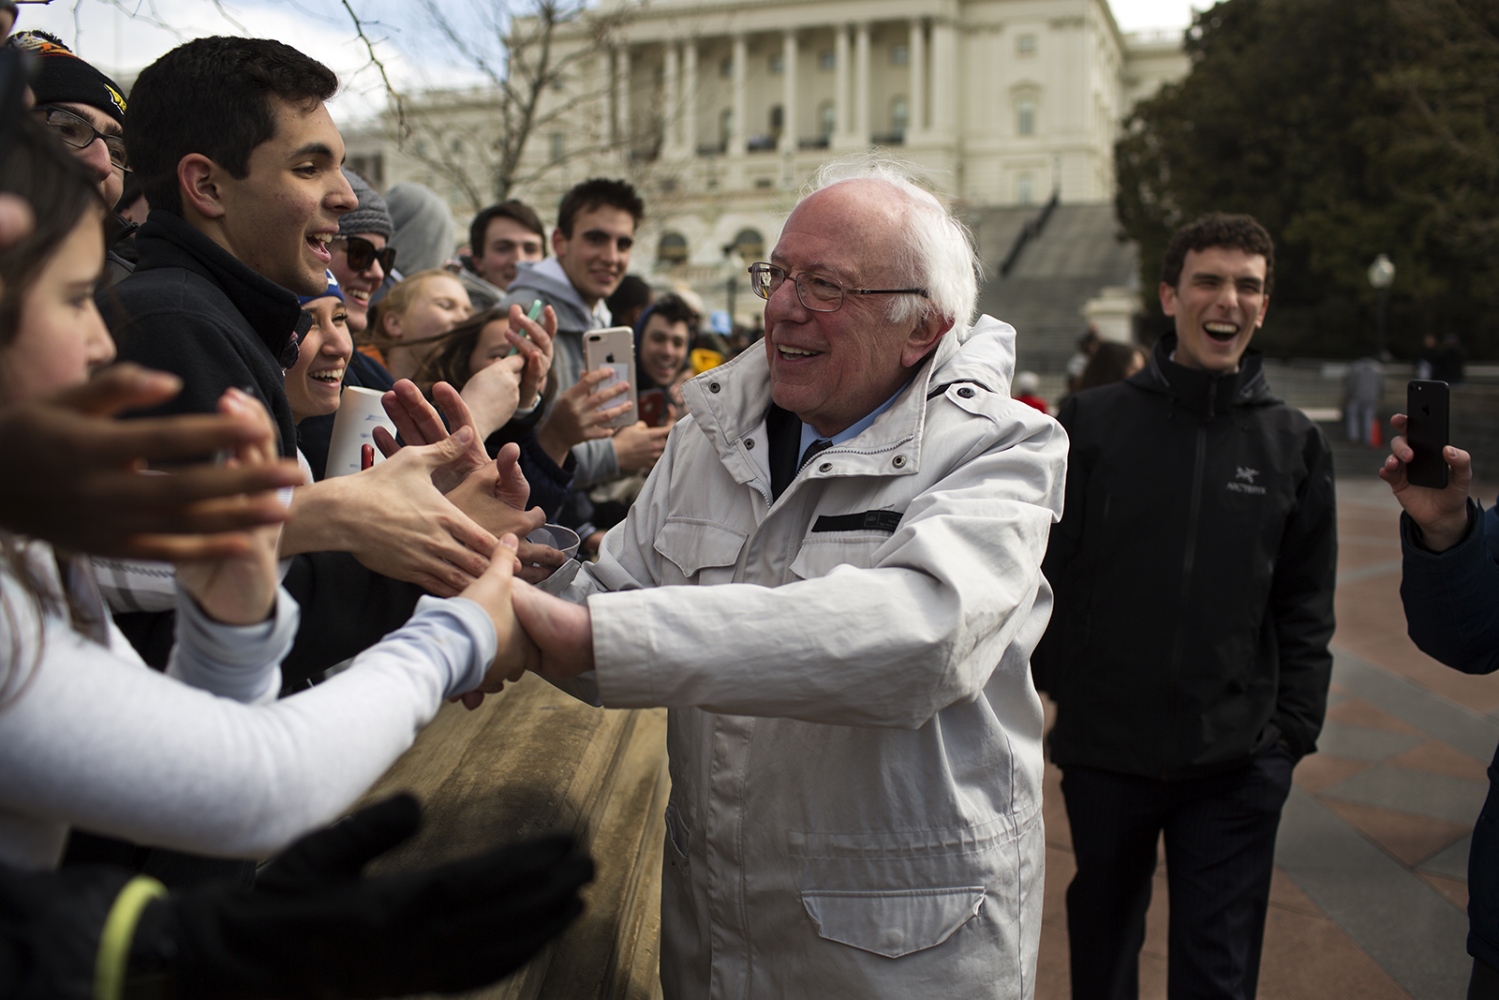 Senator Bernie Sanders greats students after the protest.